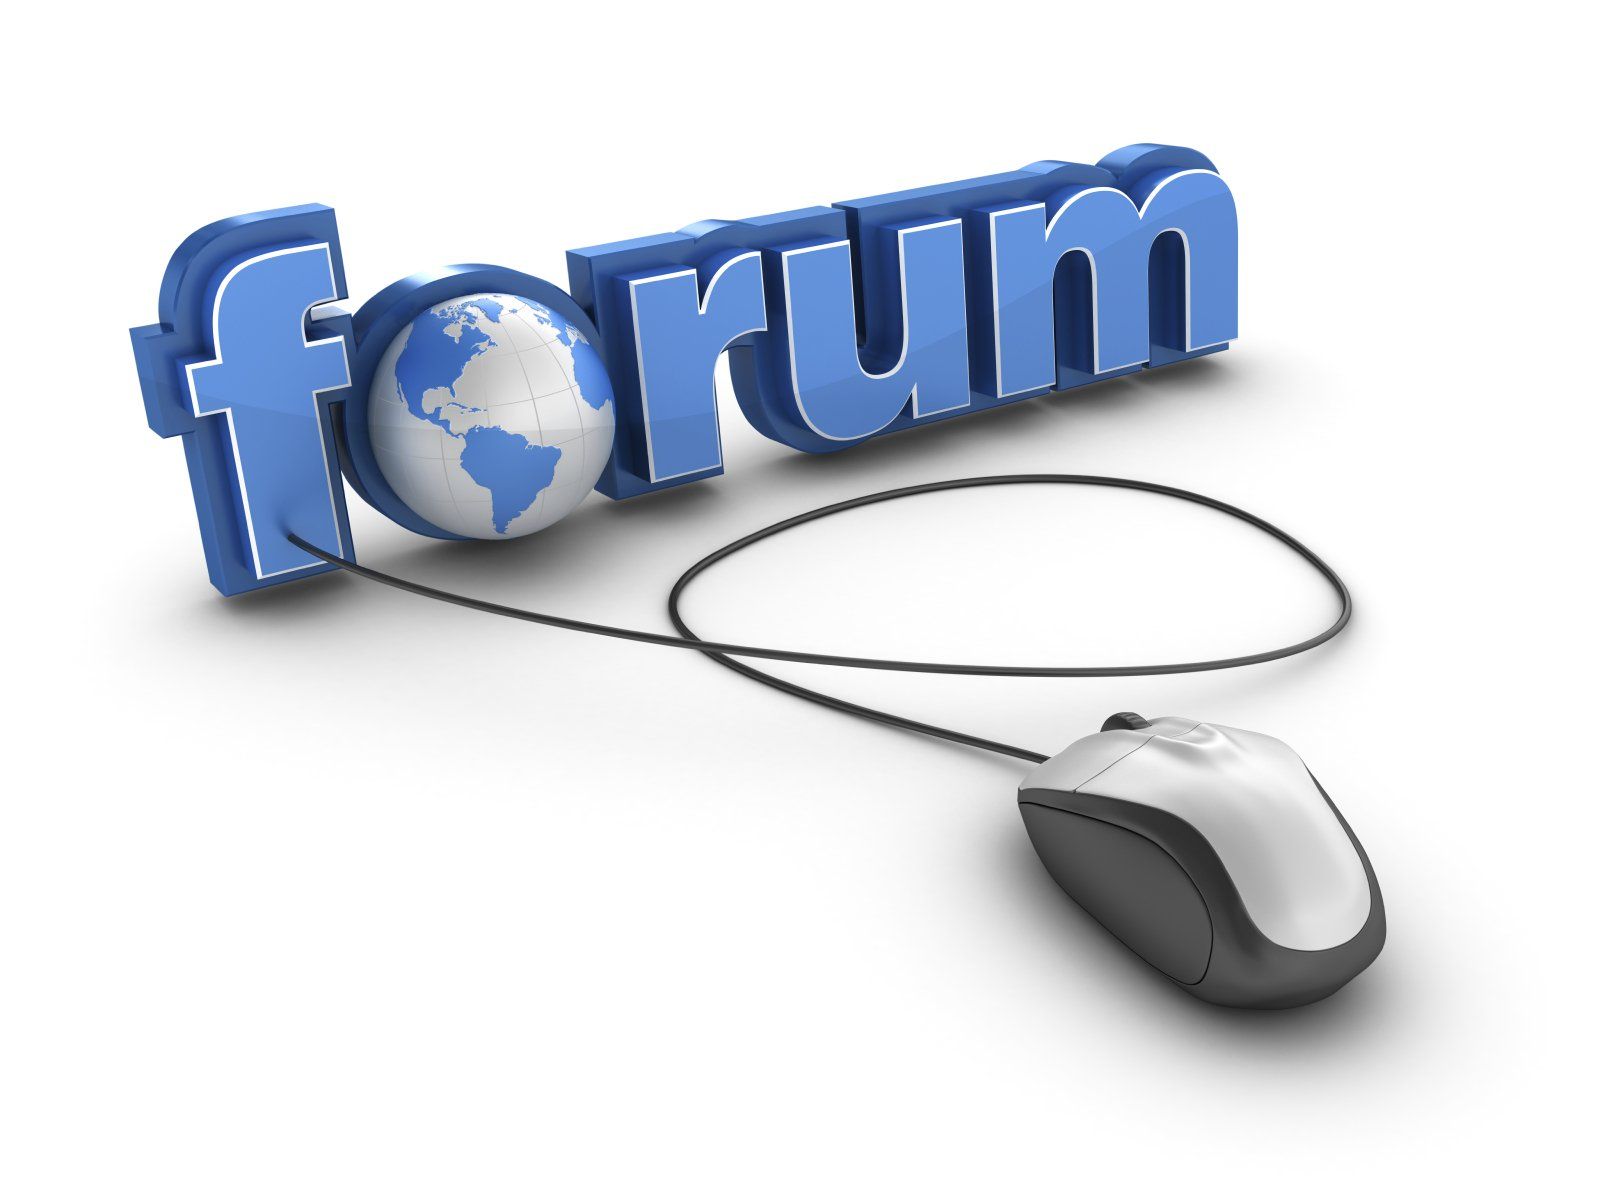 Com page fora. Интернет форум. Веб форум. Блоги и форумы. Веб форум картинки.